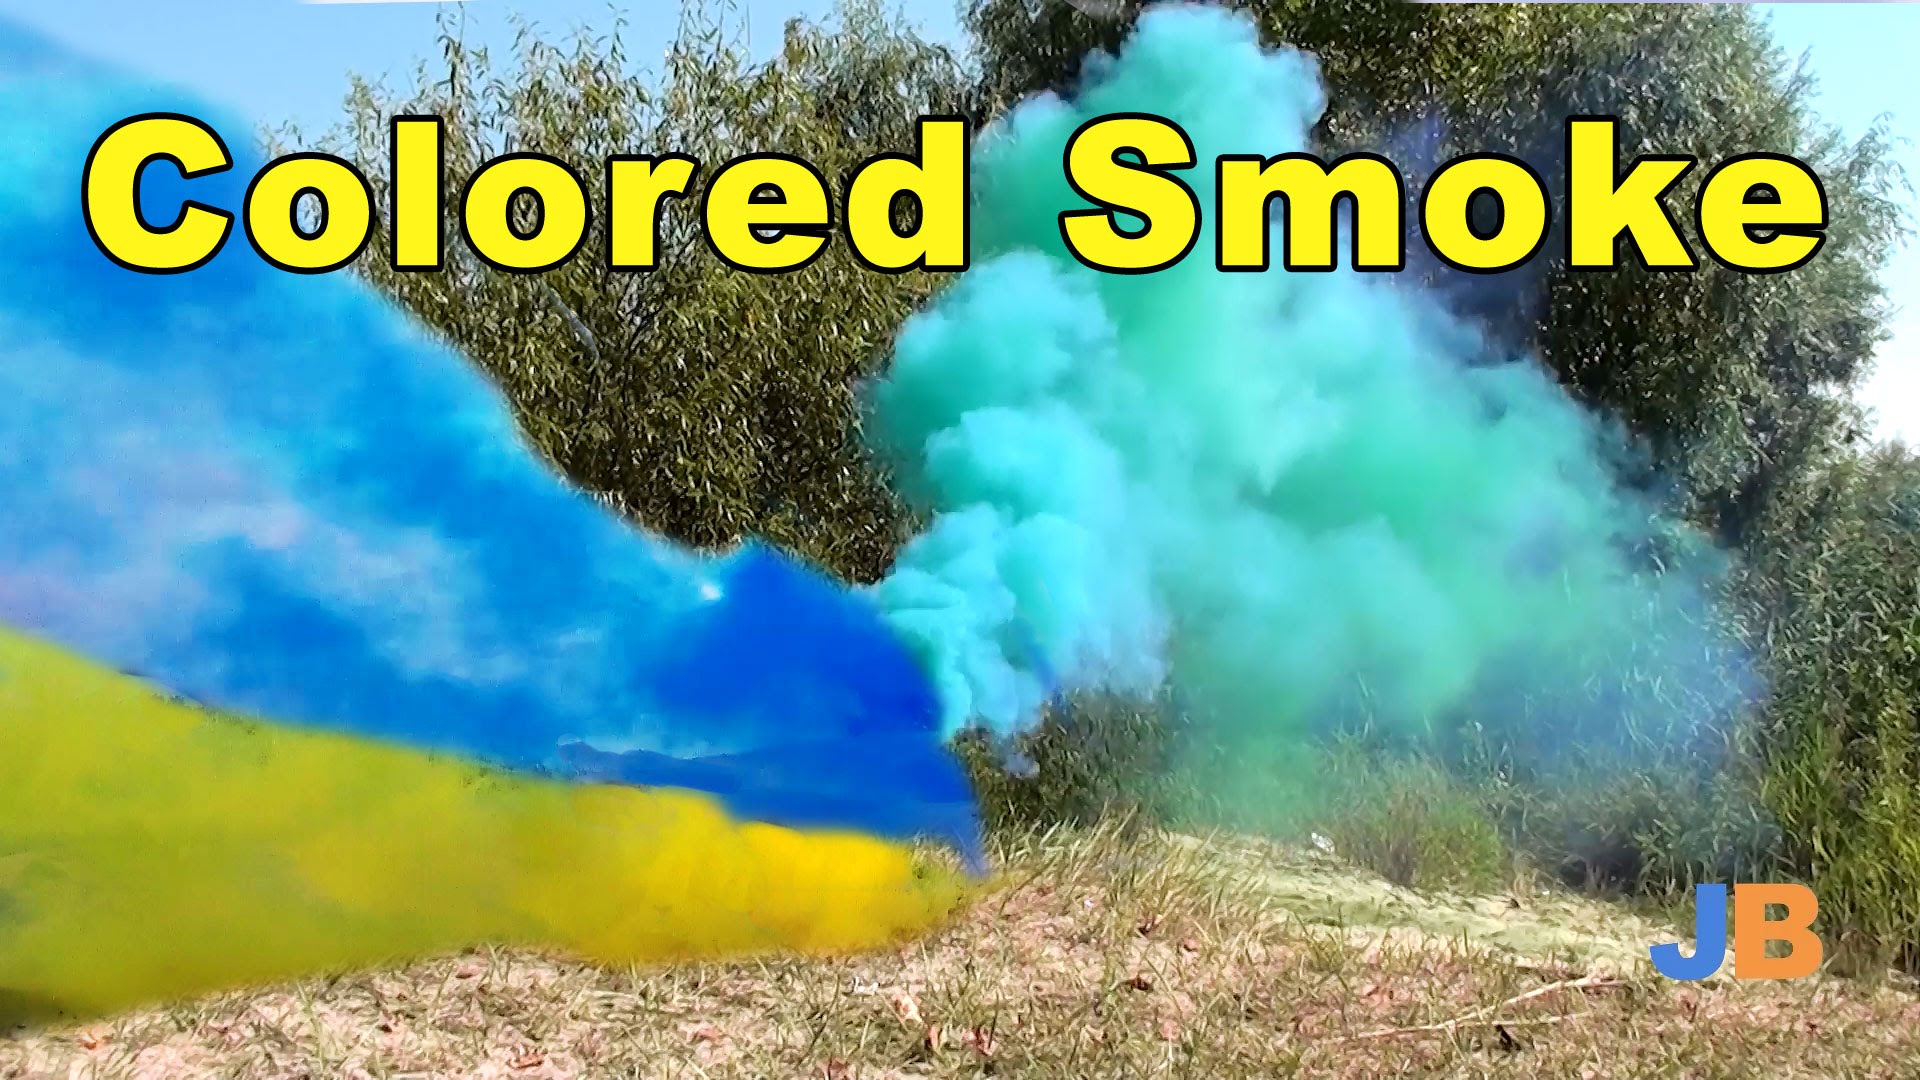 How to make colored smoke bomb - YouTube